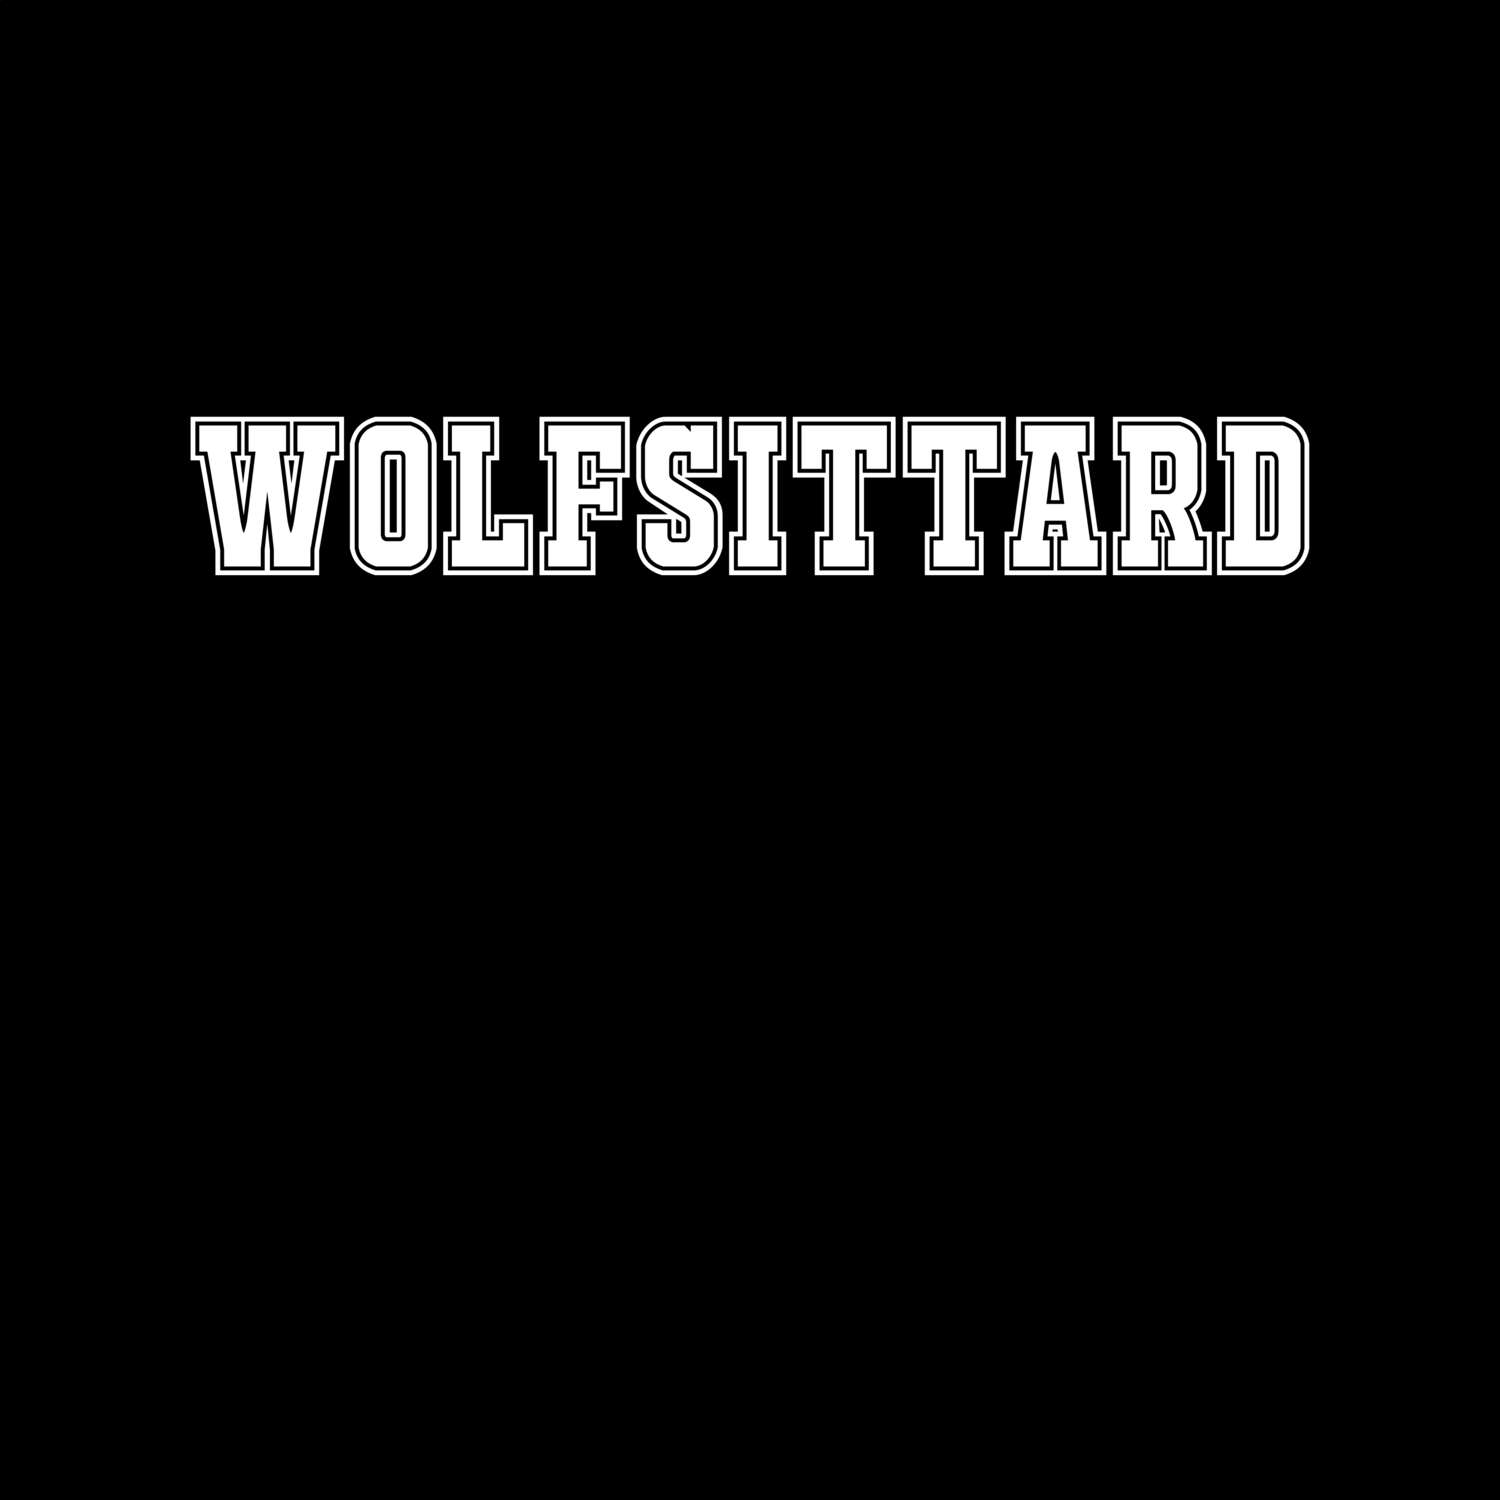 Wolfsittard T-Shirt »Classic«